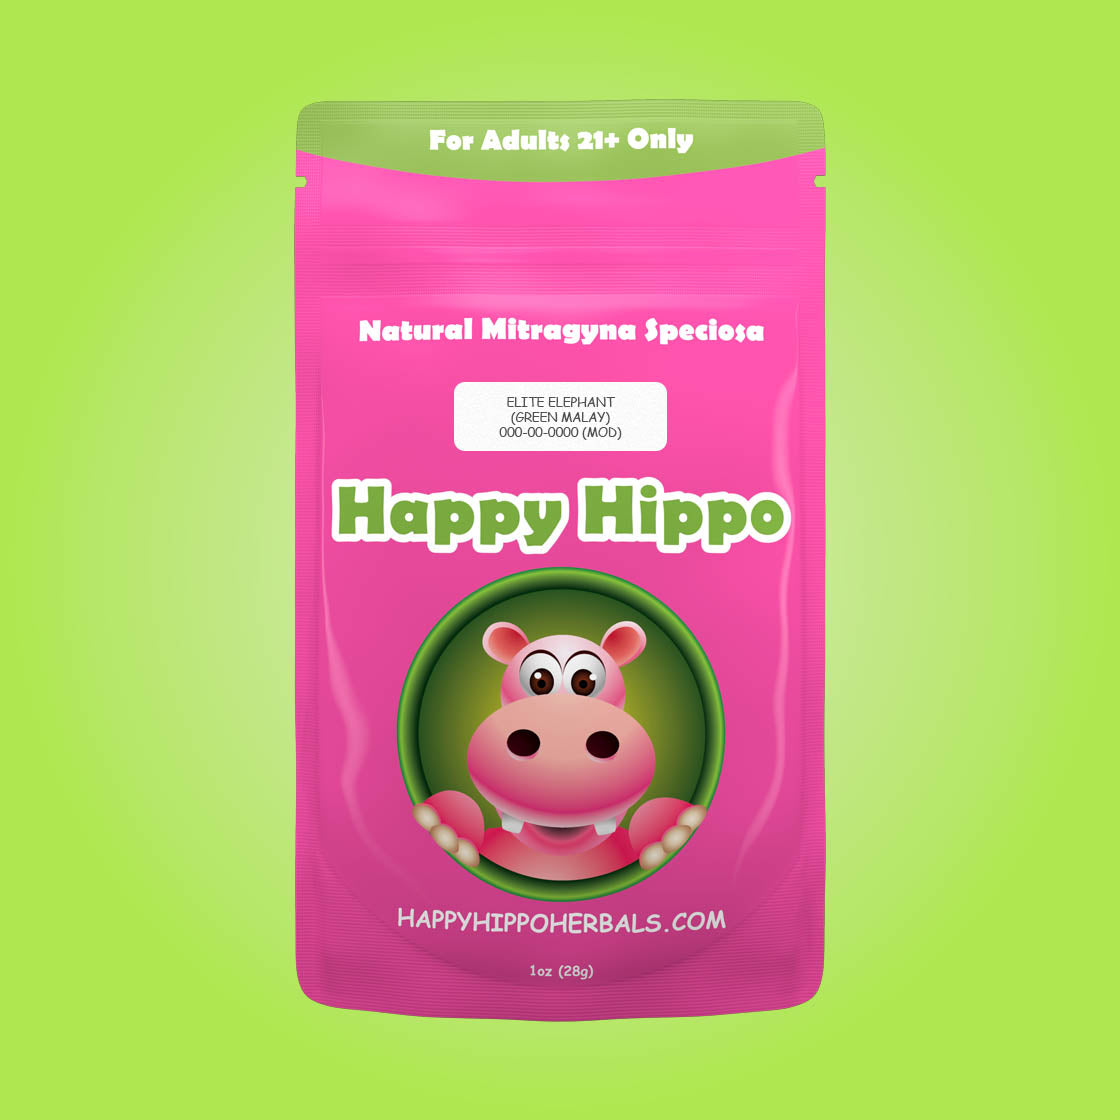 Product Image depicting a 1oz bag of Happy Hippo Green Malay Kratom Powder (Mitragyna Speciosa).